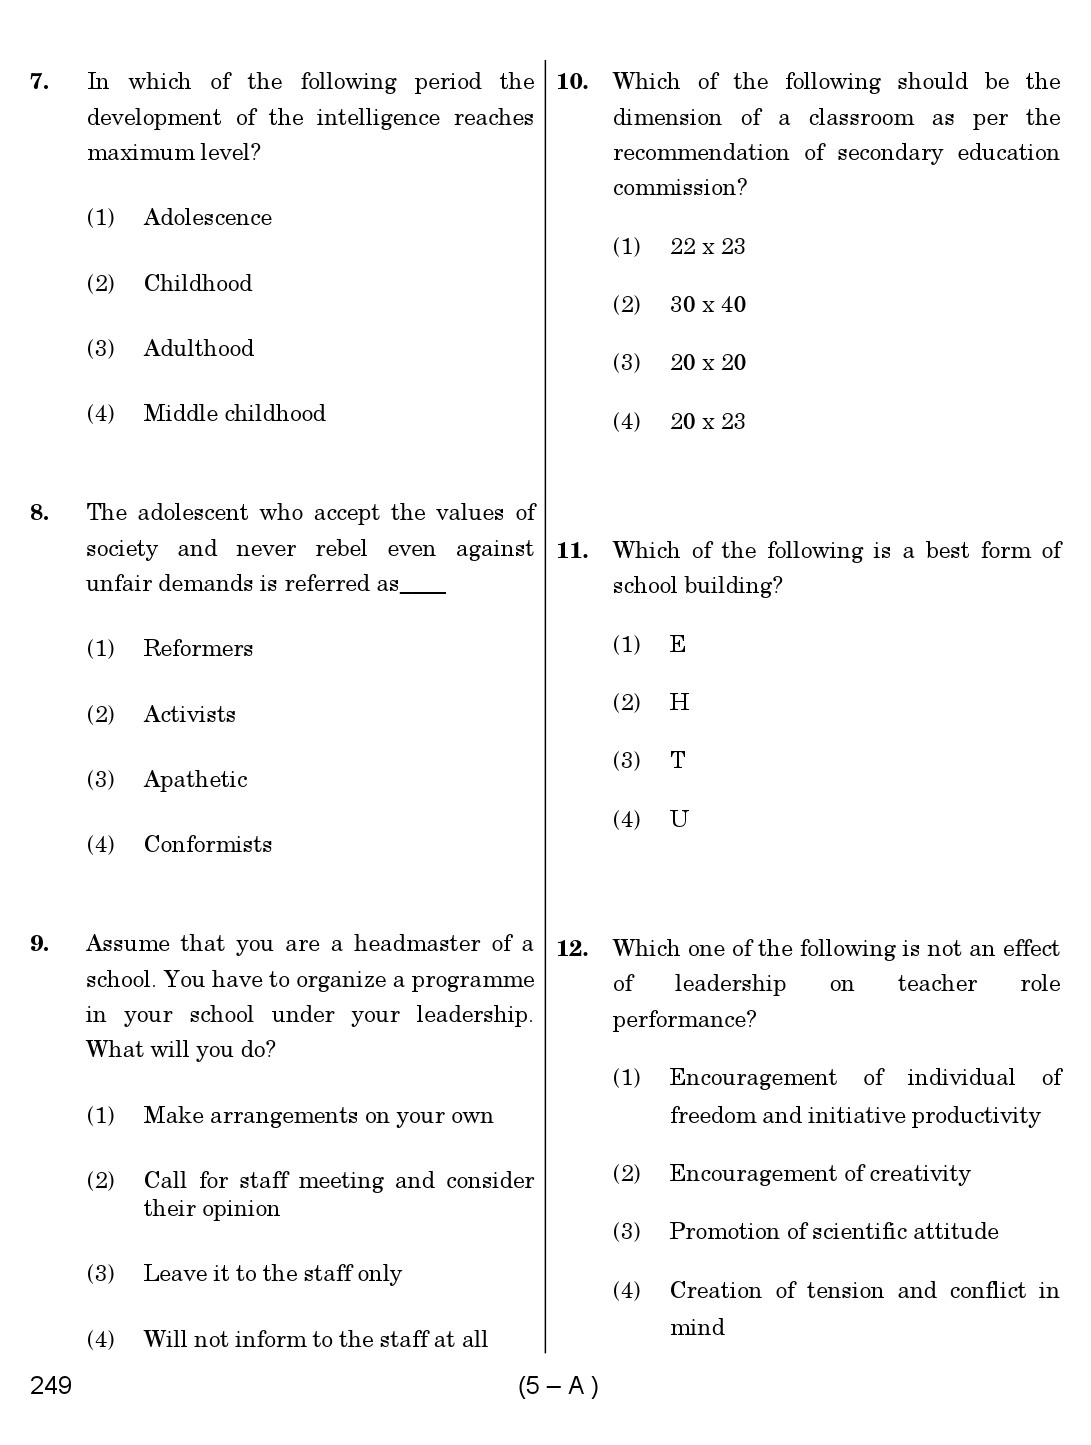 Karnataka PSC Principal Exam Sample Question Paper Subject code 249 5